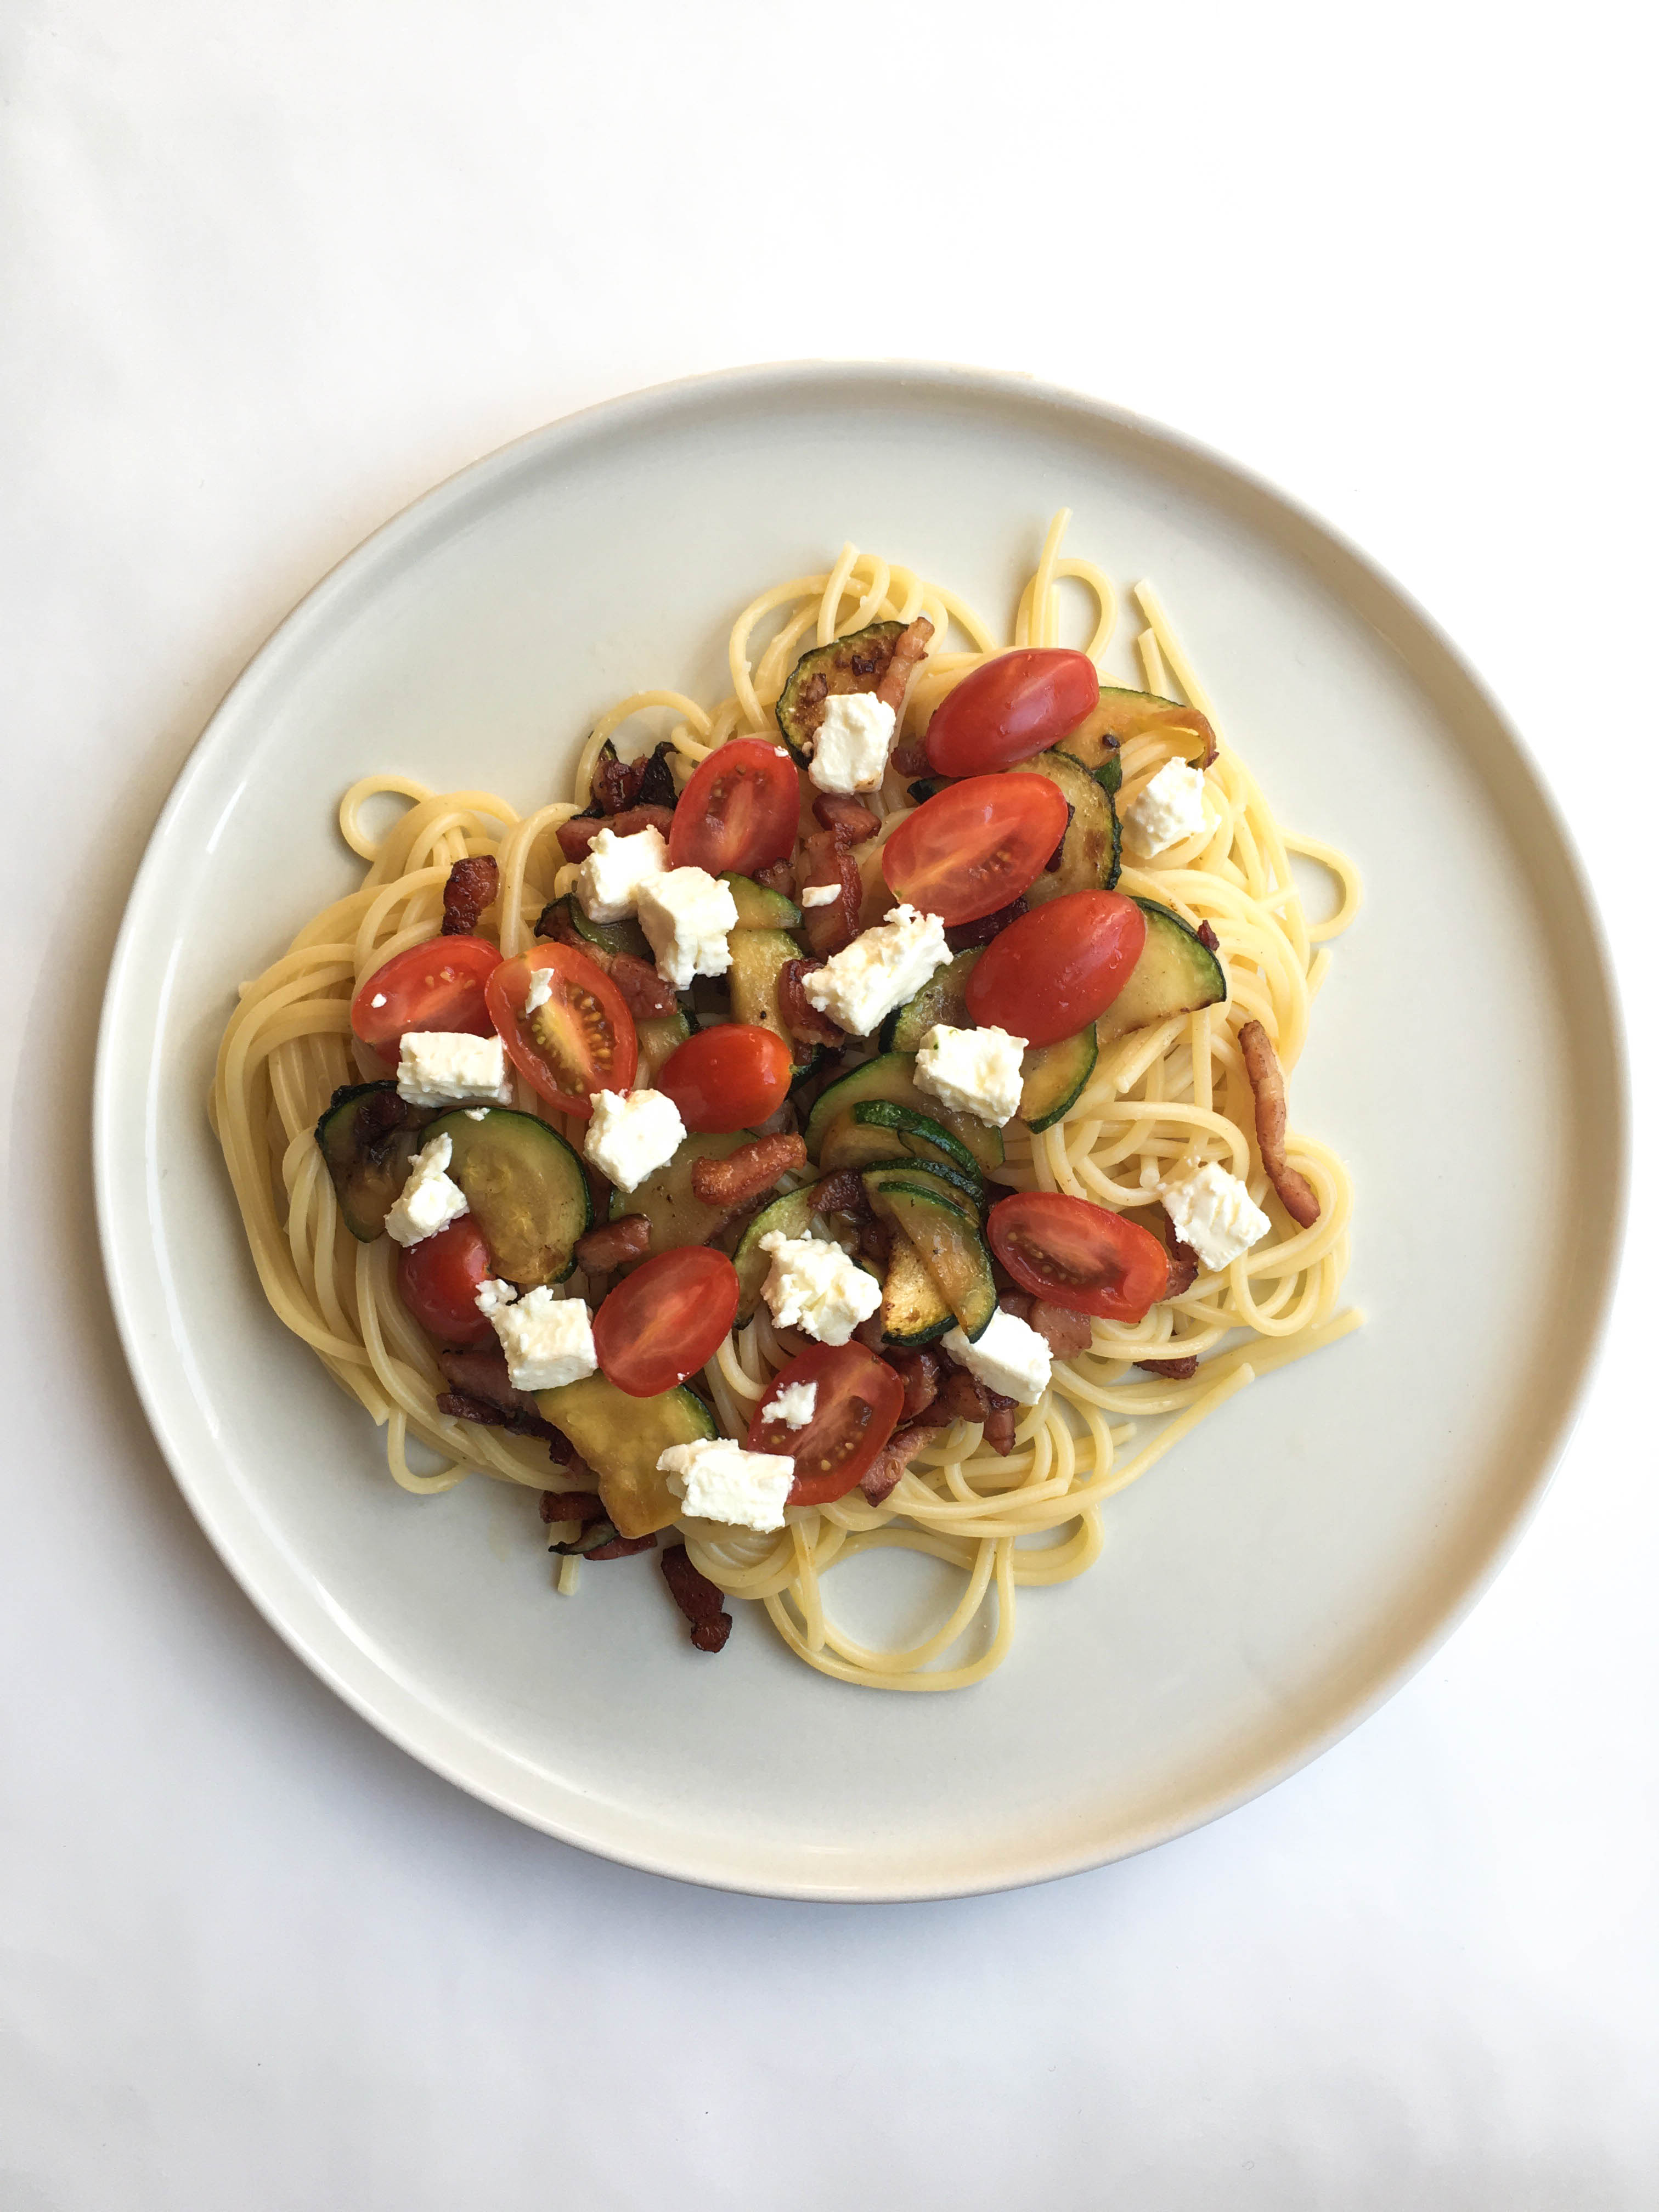 Recette Spaghetti aux légumes